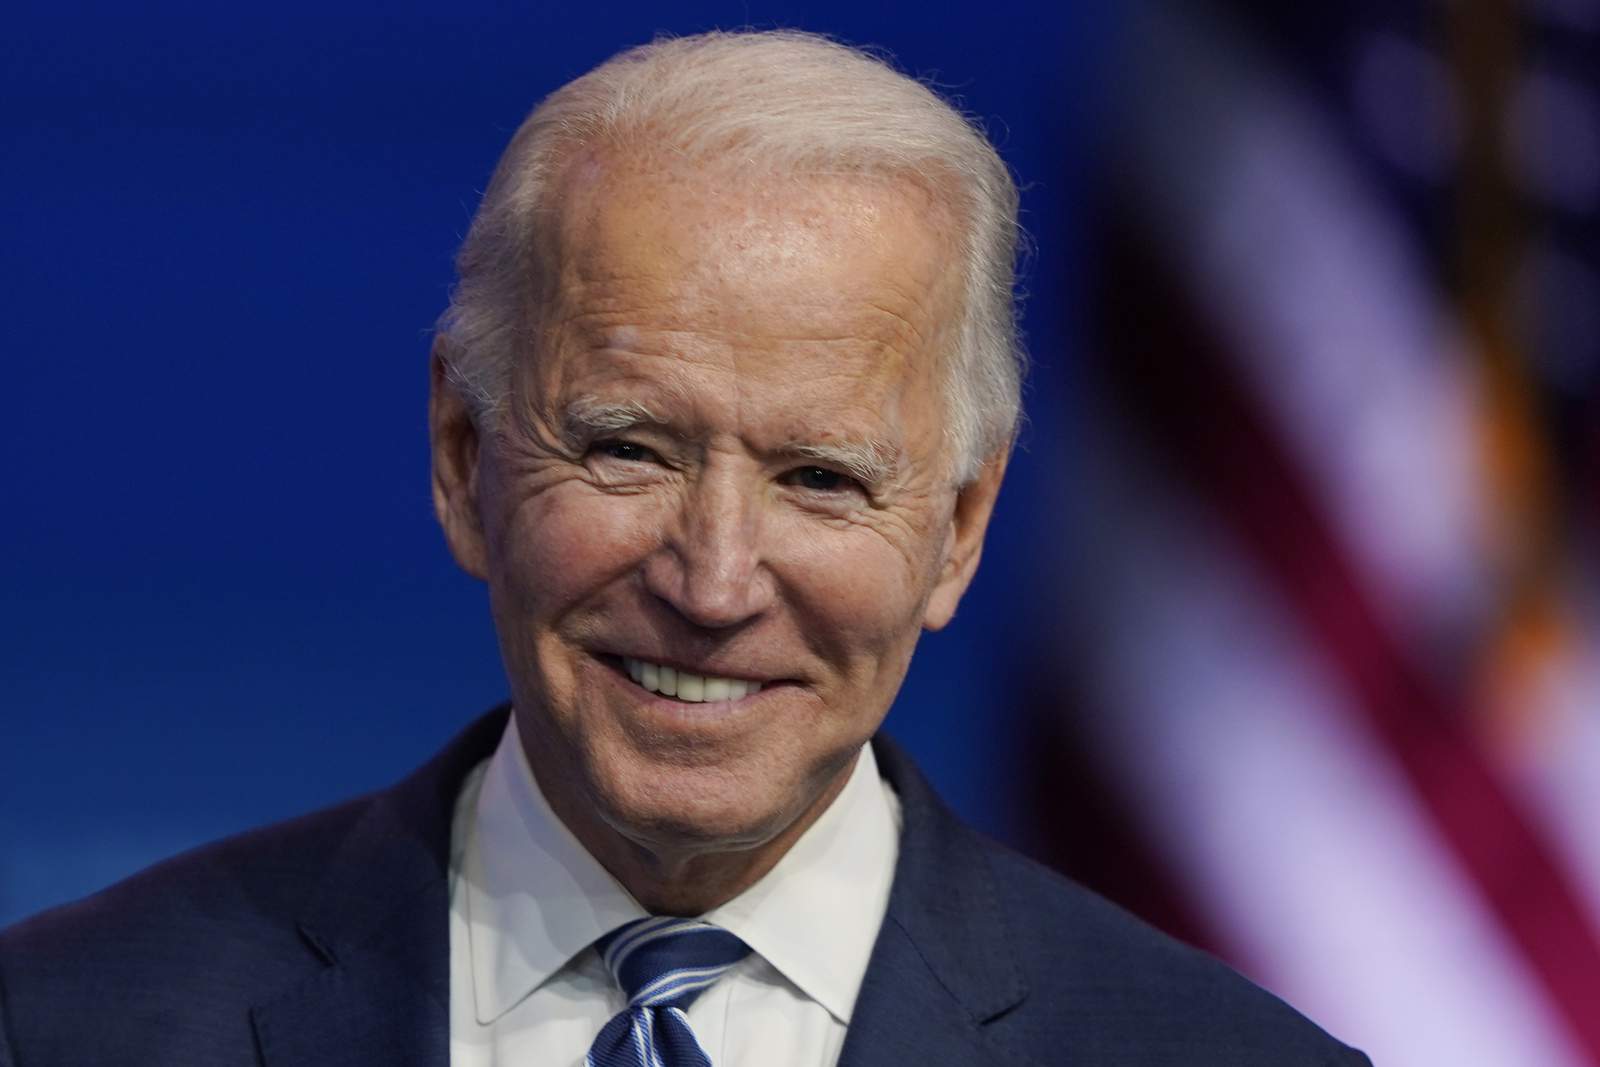 Biden's plea for cooperation confronts a polarized Congress